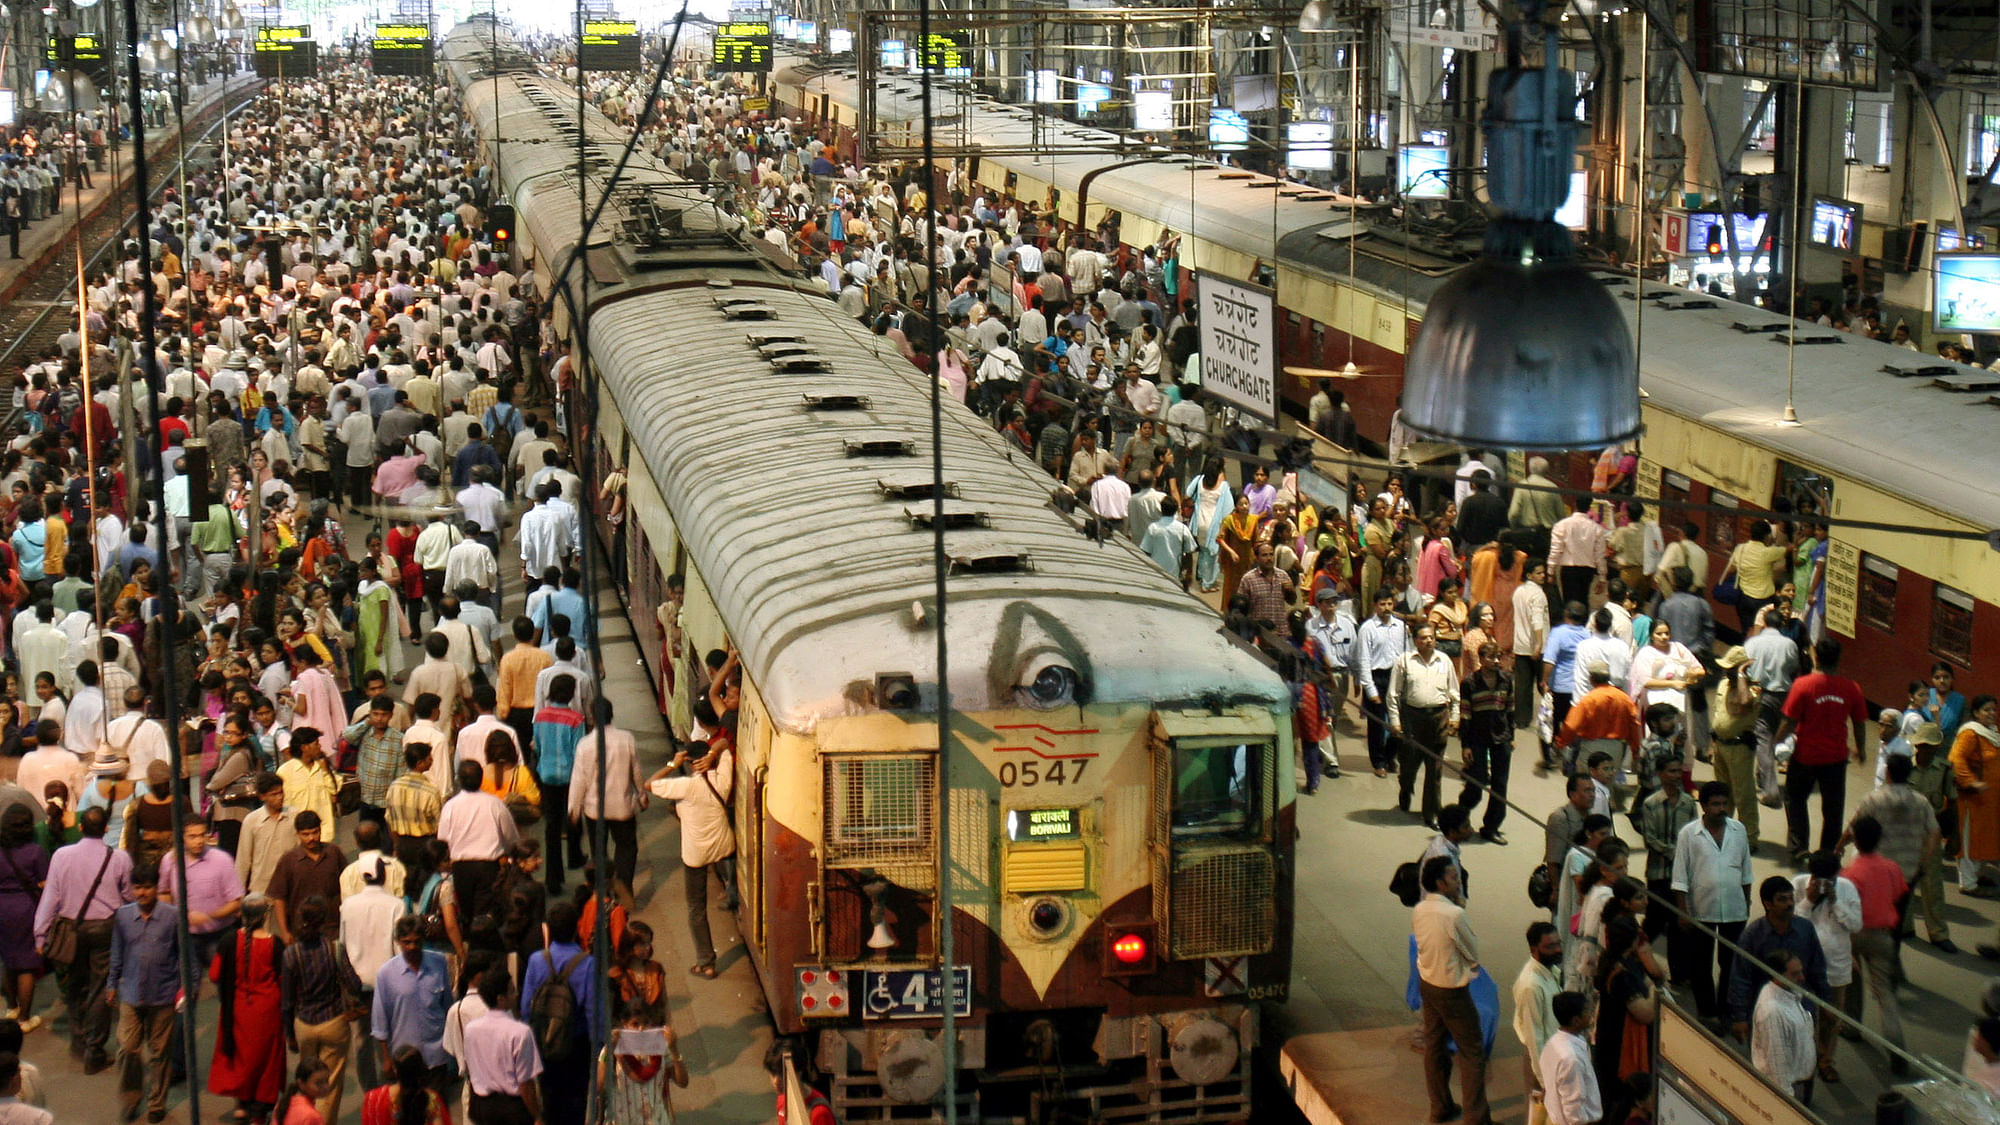 Mumbai’s suburban Railway Network is considered the lifeline of the maximum city as it covers at least 319 kilometres.